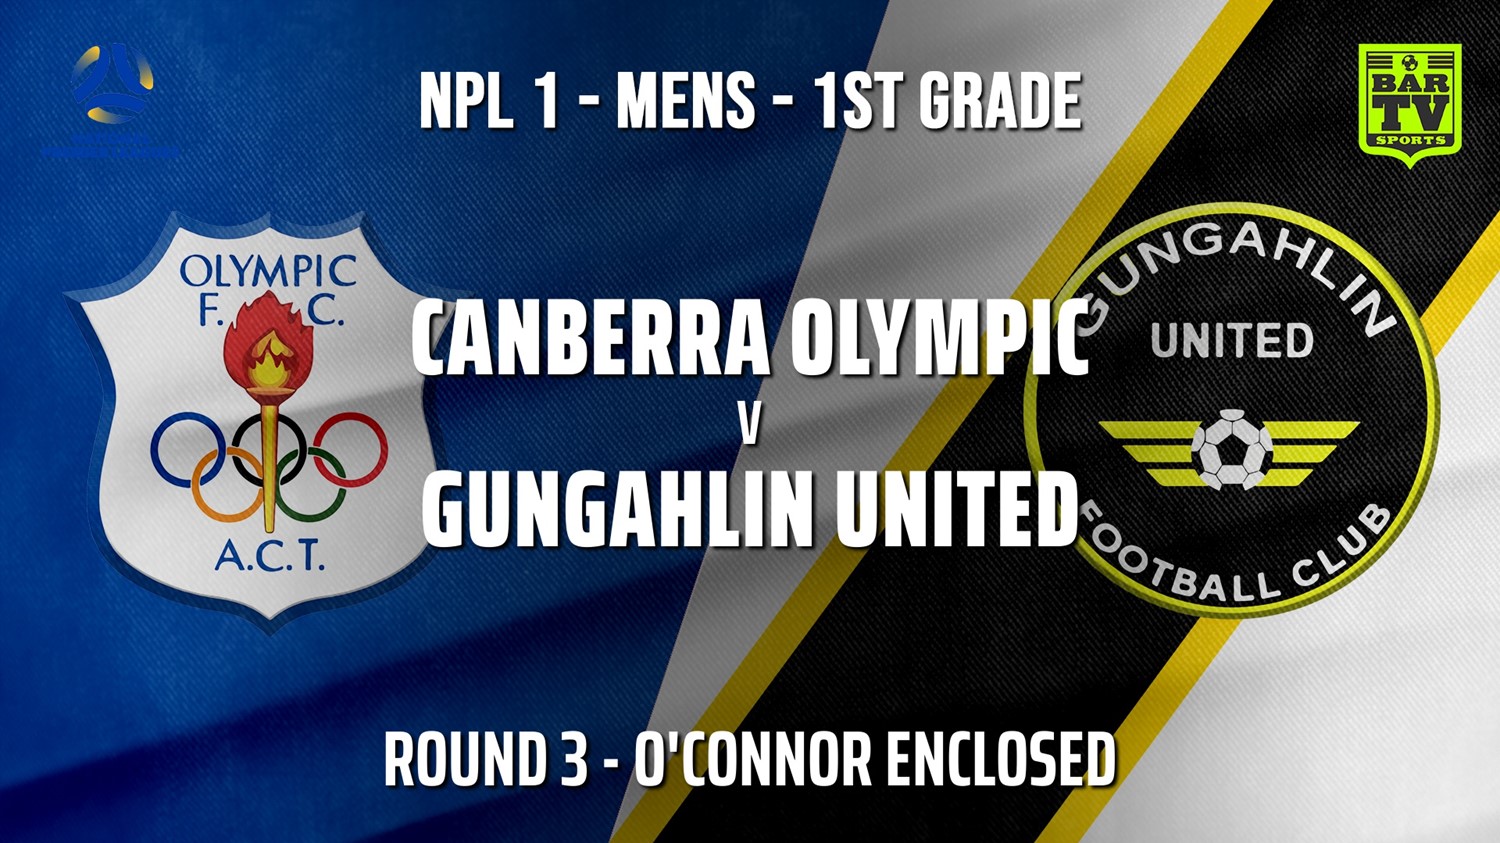 210421-NPL - CAPITAL Round 3 - Canberra Olympic FC v Gungahlin United FC Minigame Slate Image